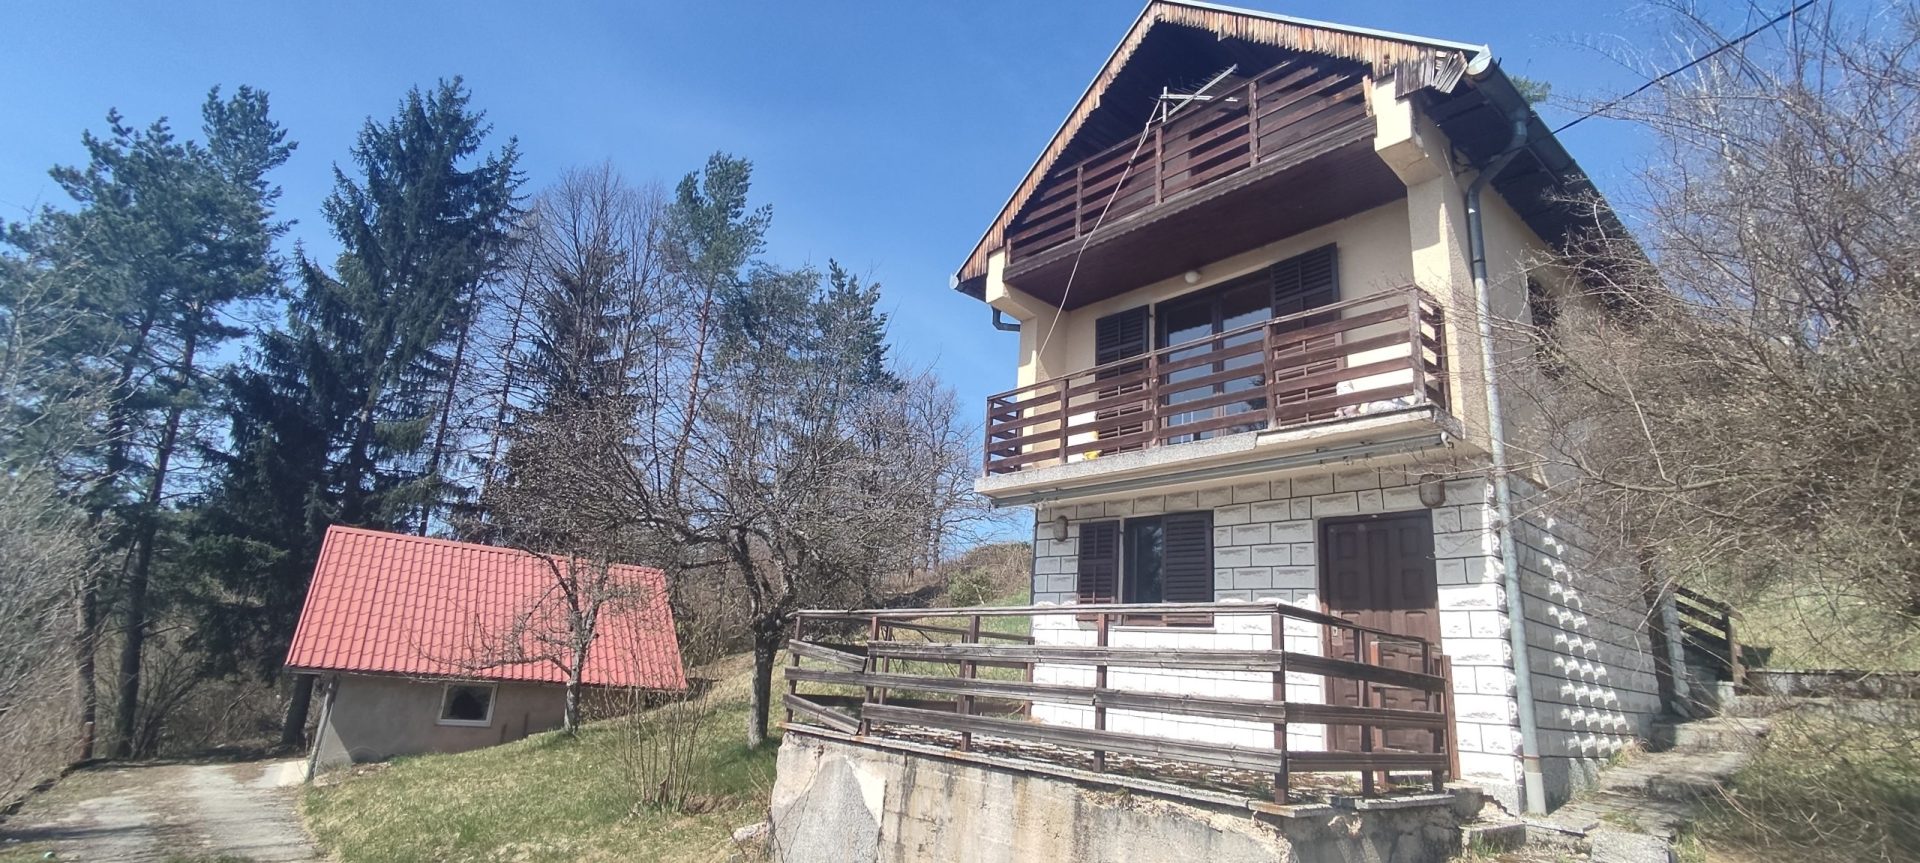 Cottage next to Sarajevop